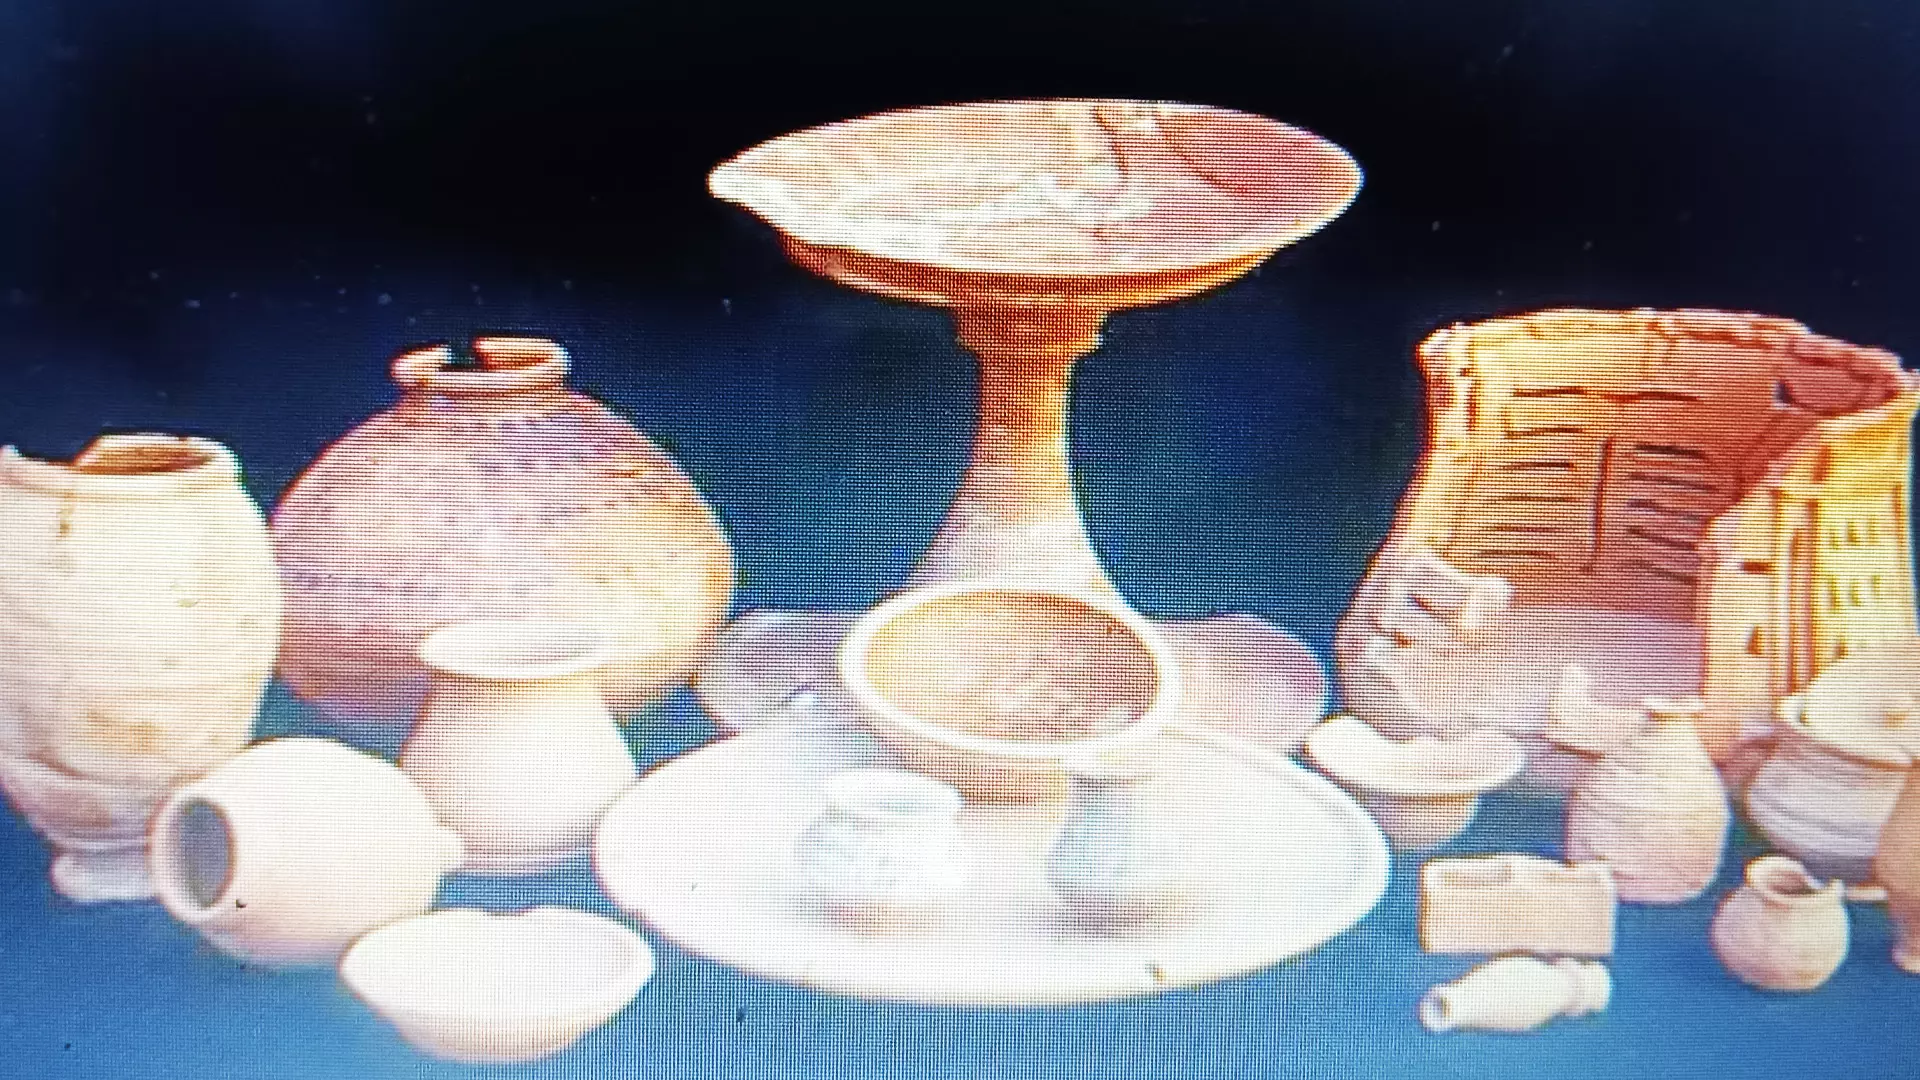 Ceramics belonging to the Harappan era.